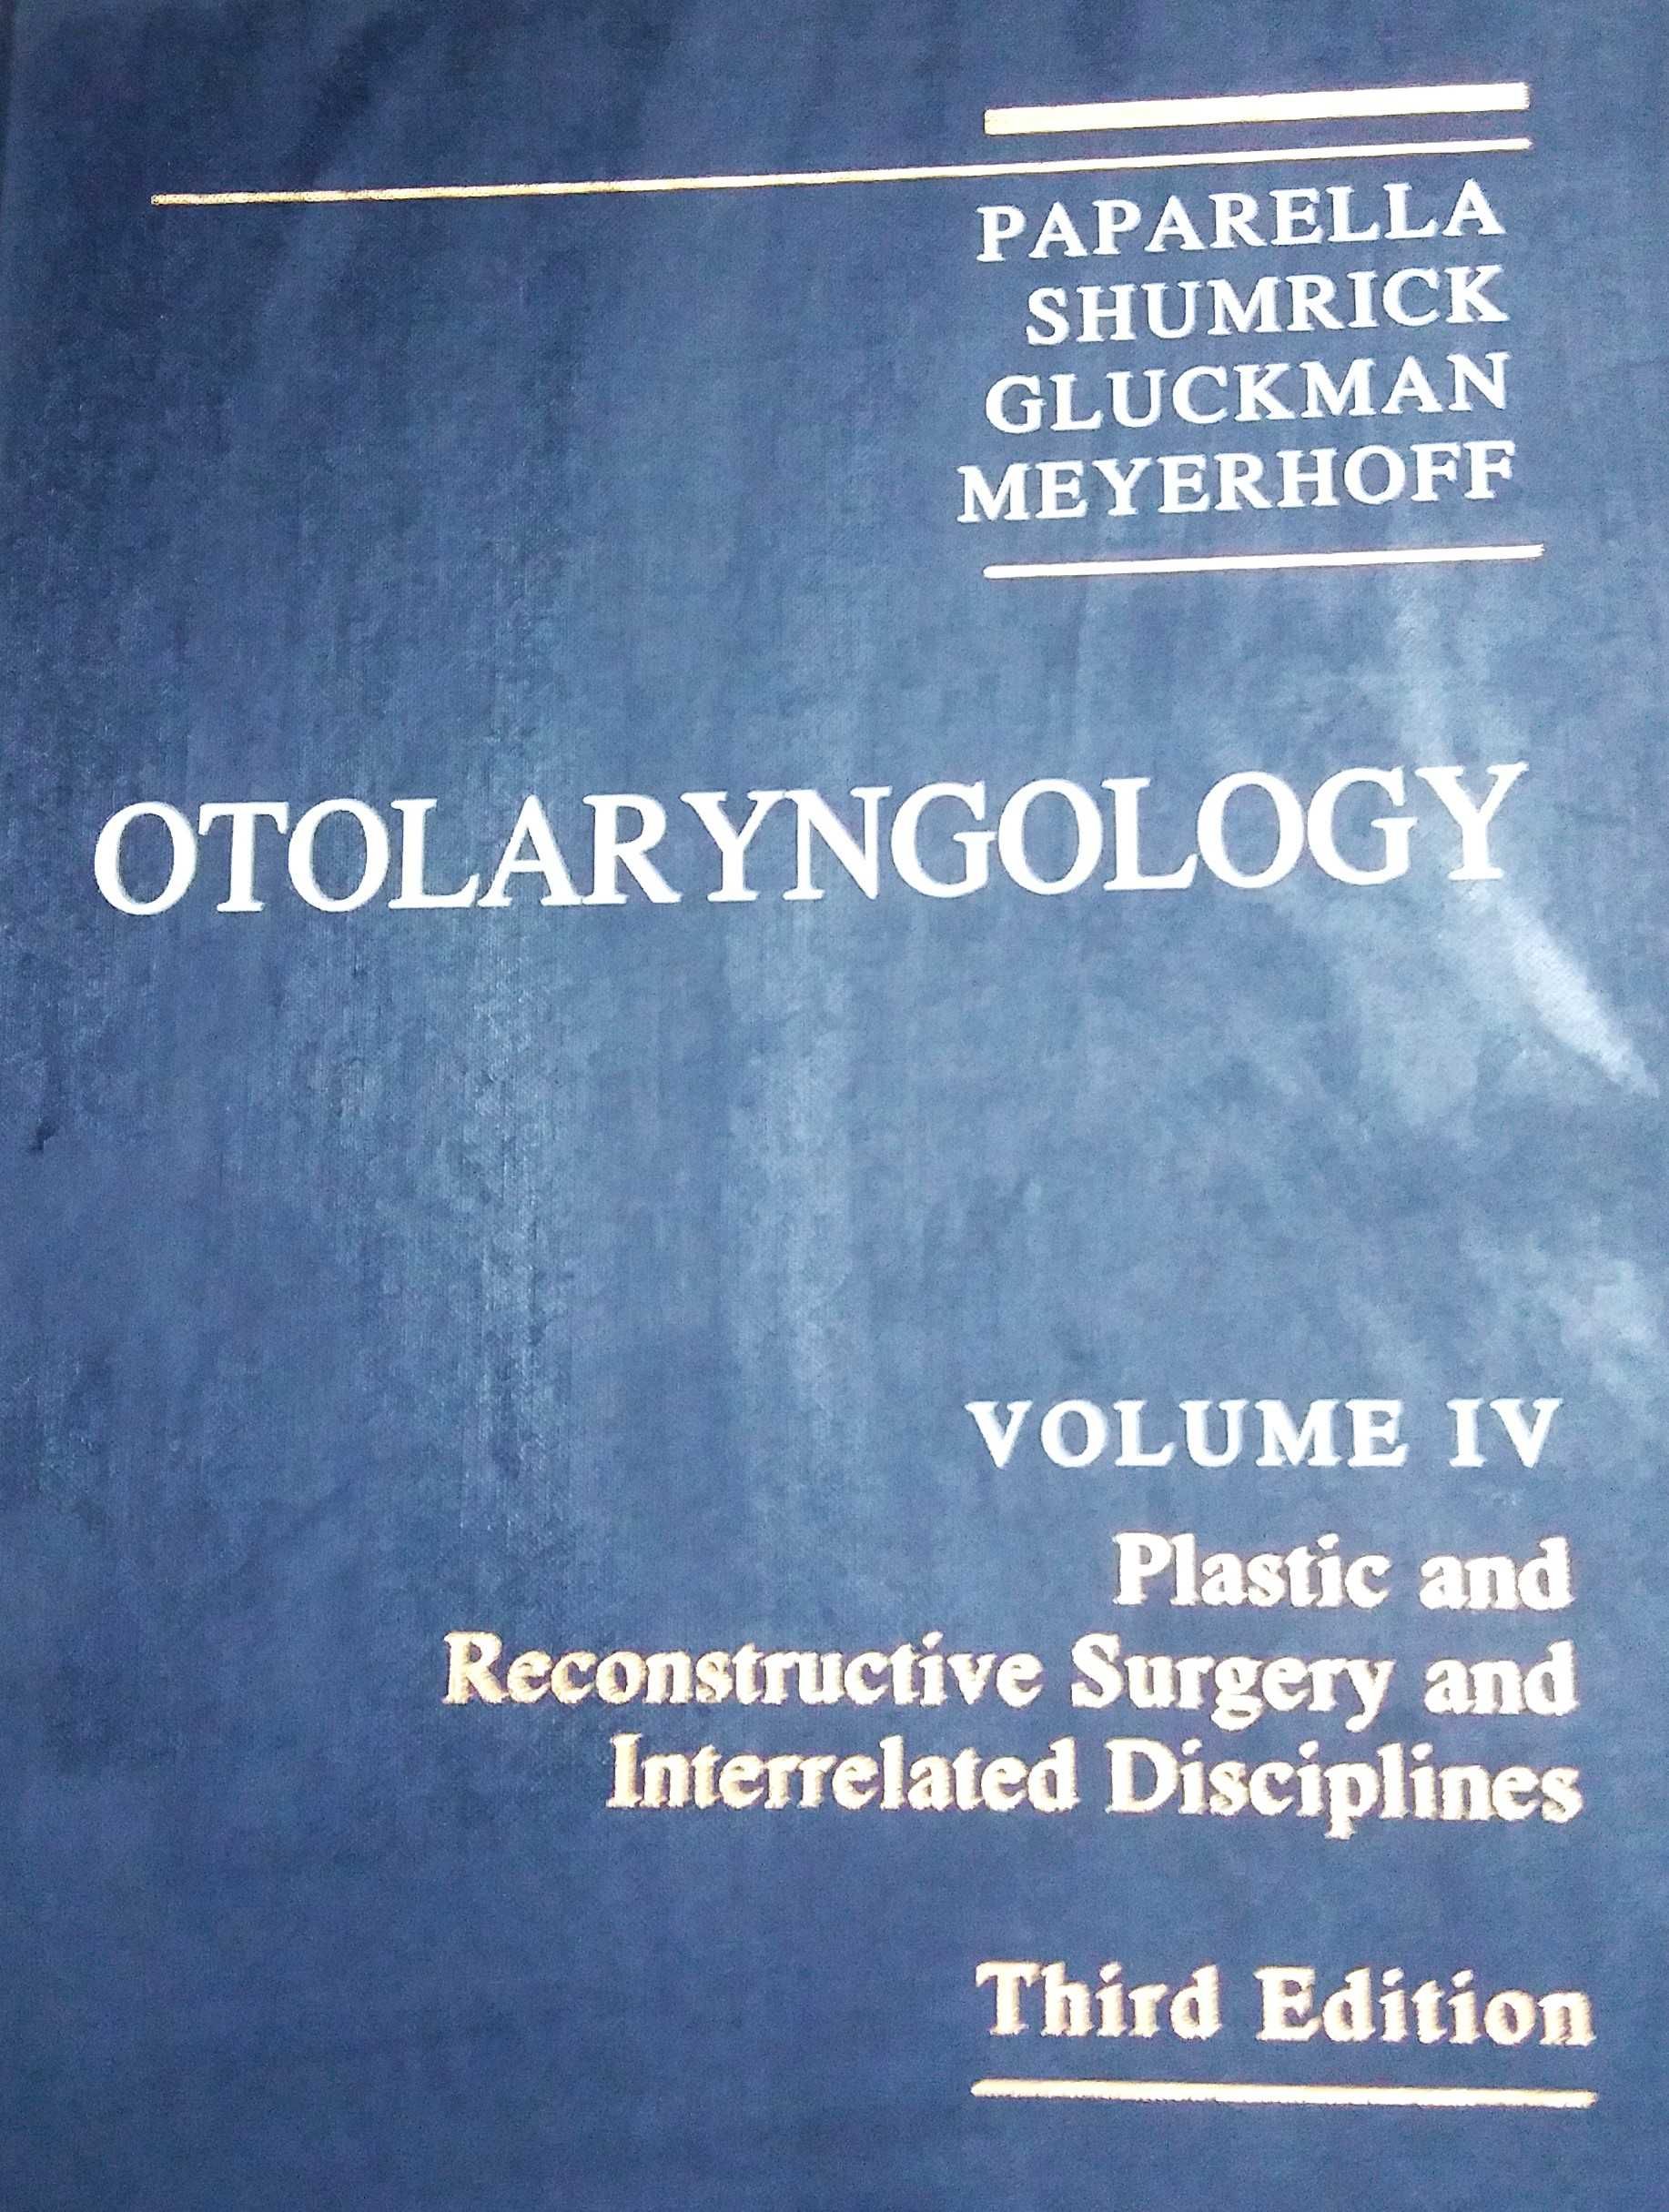 Otolaryngology ORL chirurgie 4 volume